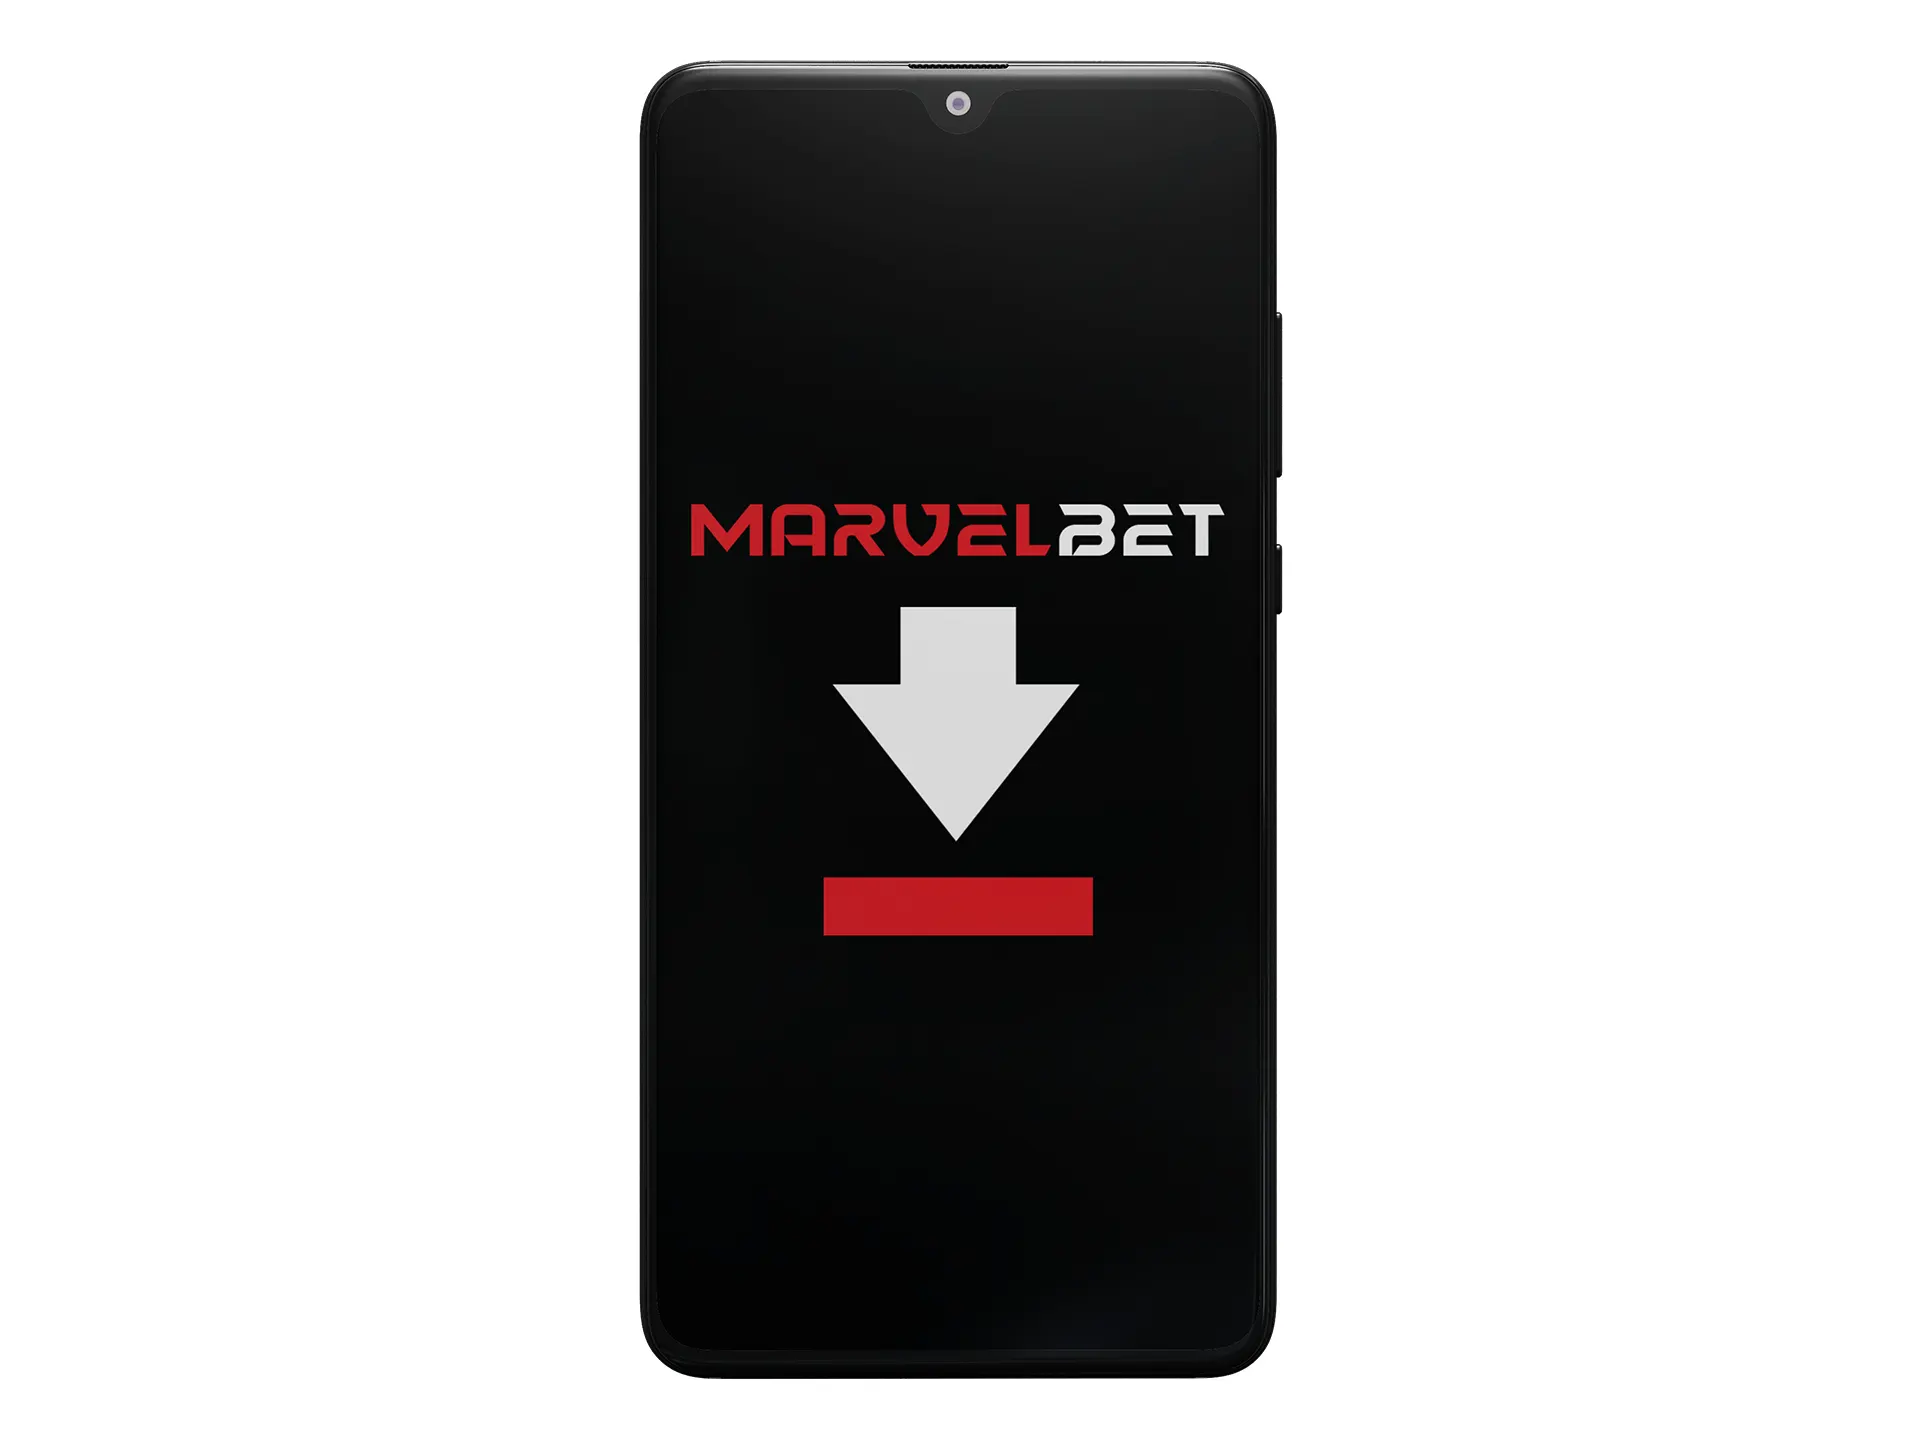 Download the Marvelbet app.